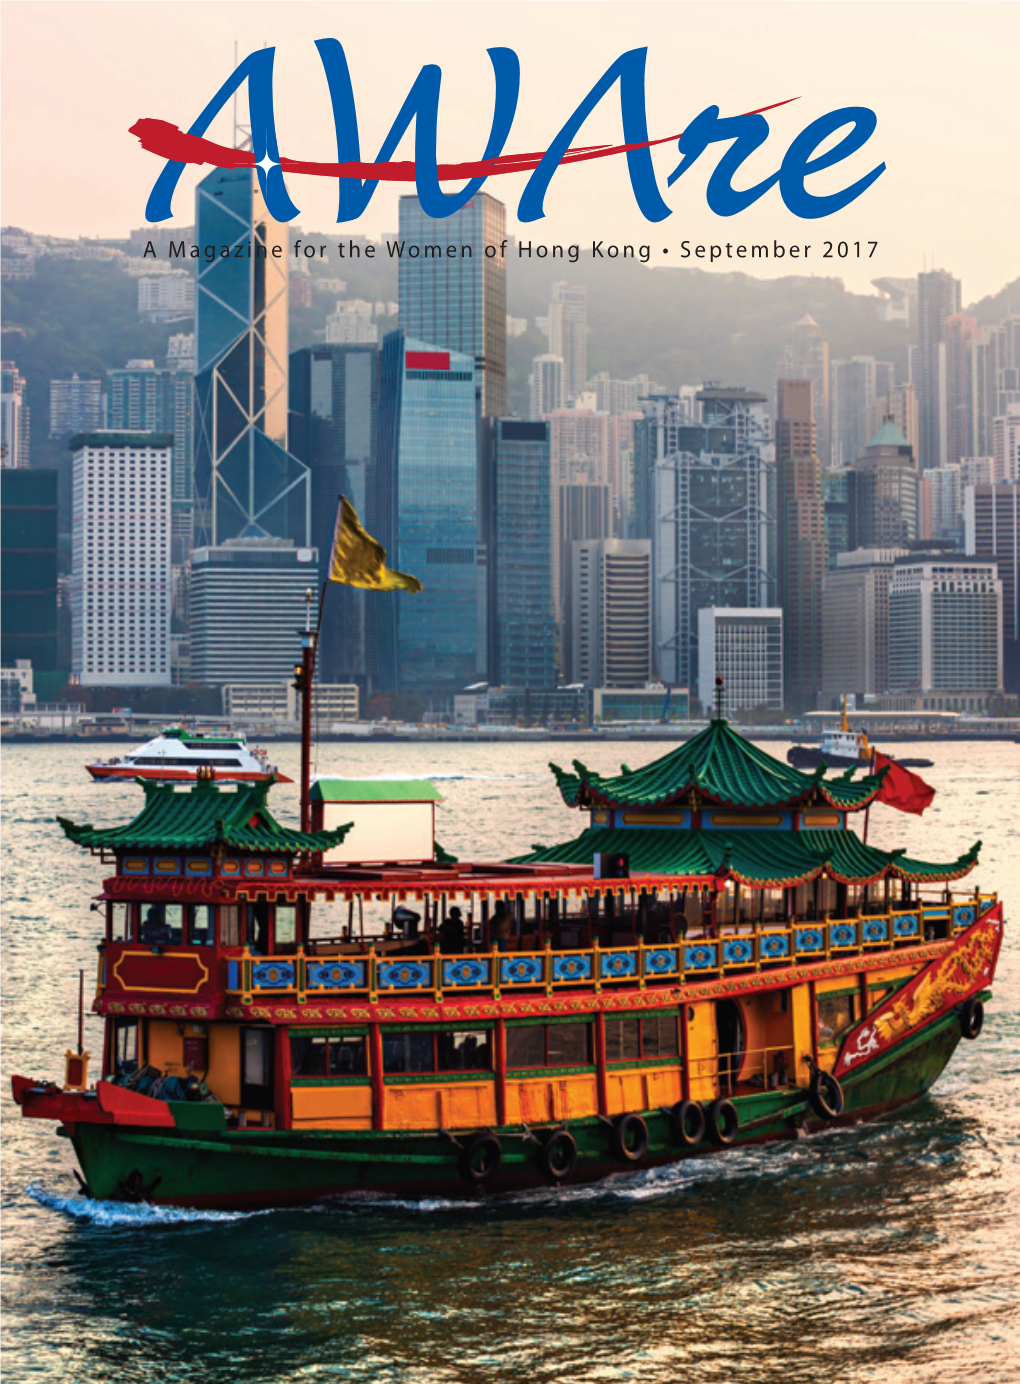 A Magazine for the Women of Hong Kong • September 2017